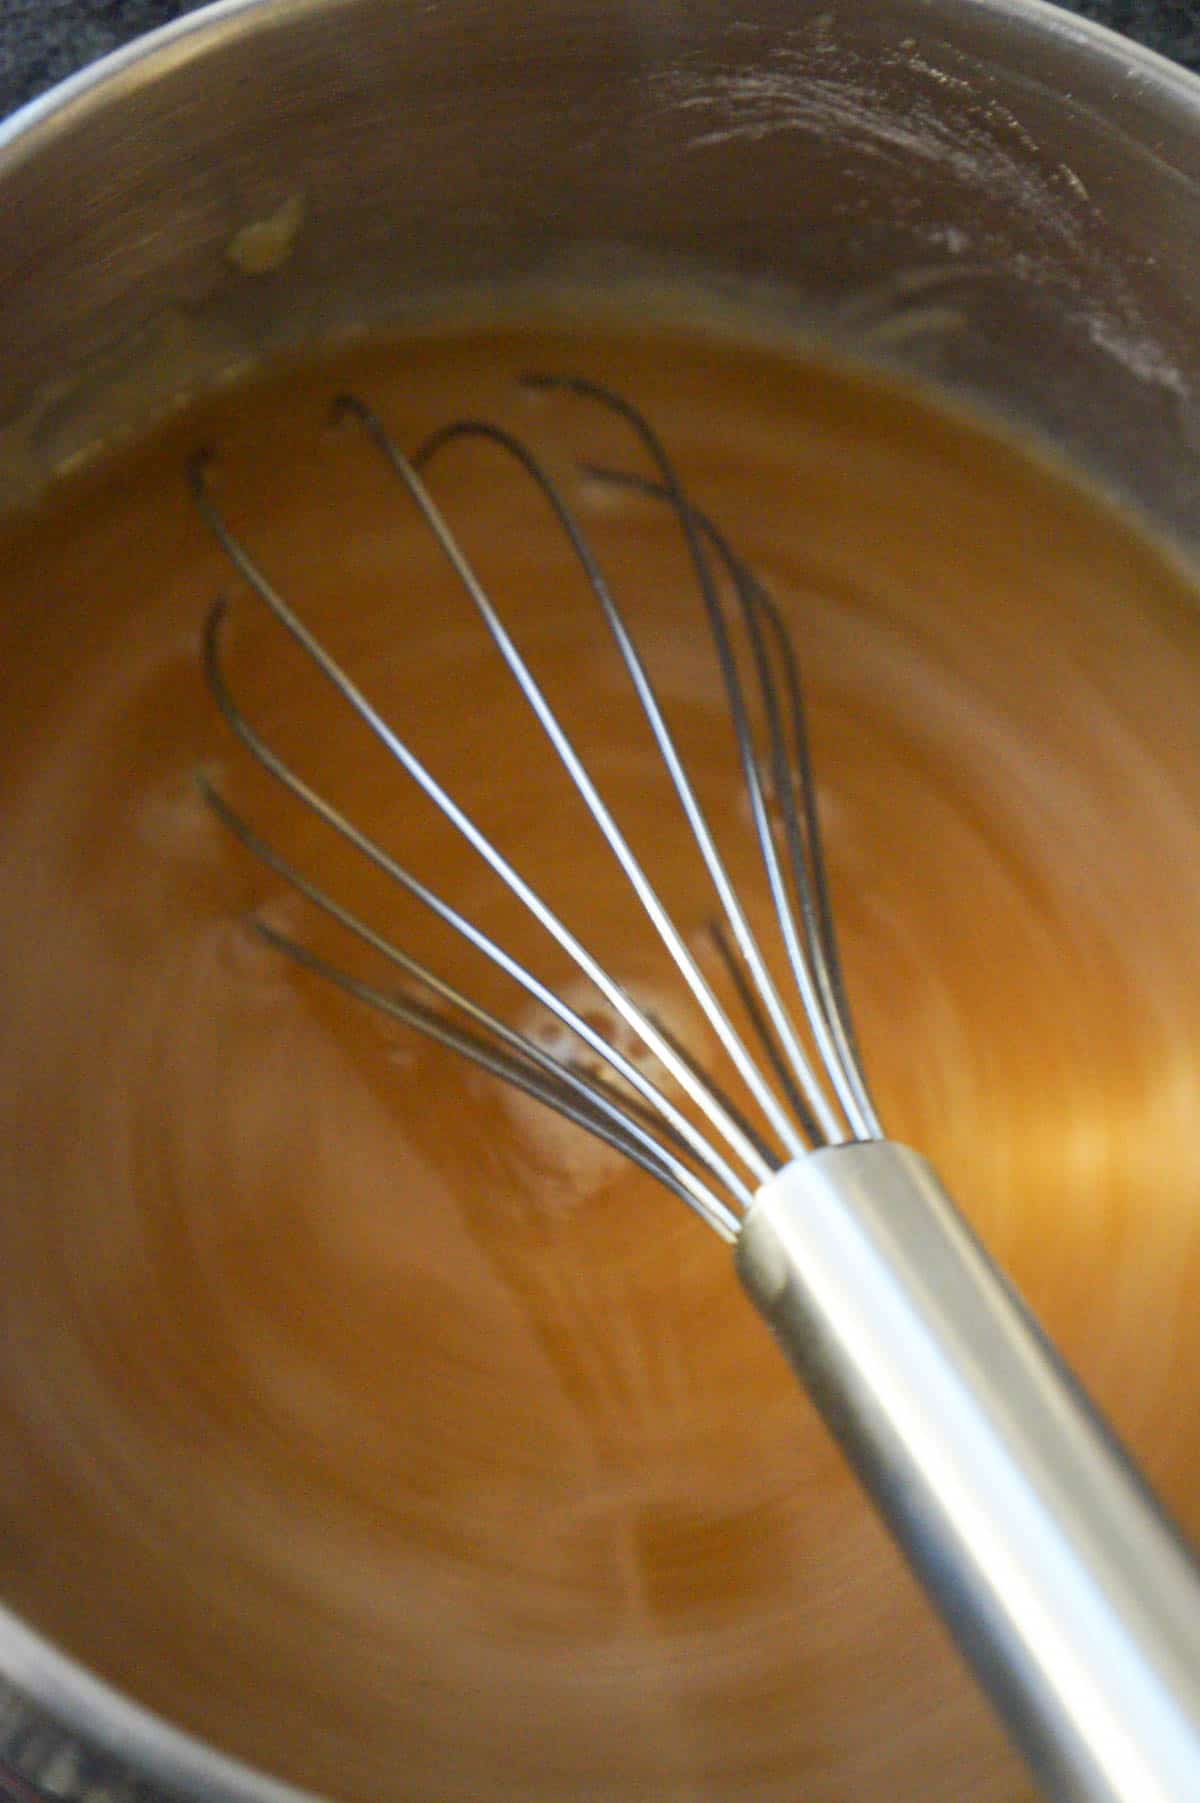 whisking gravy in a saucepan